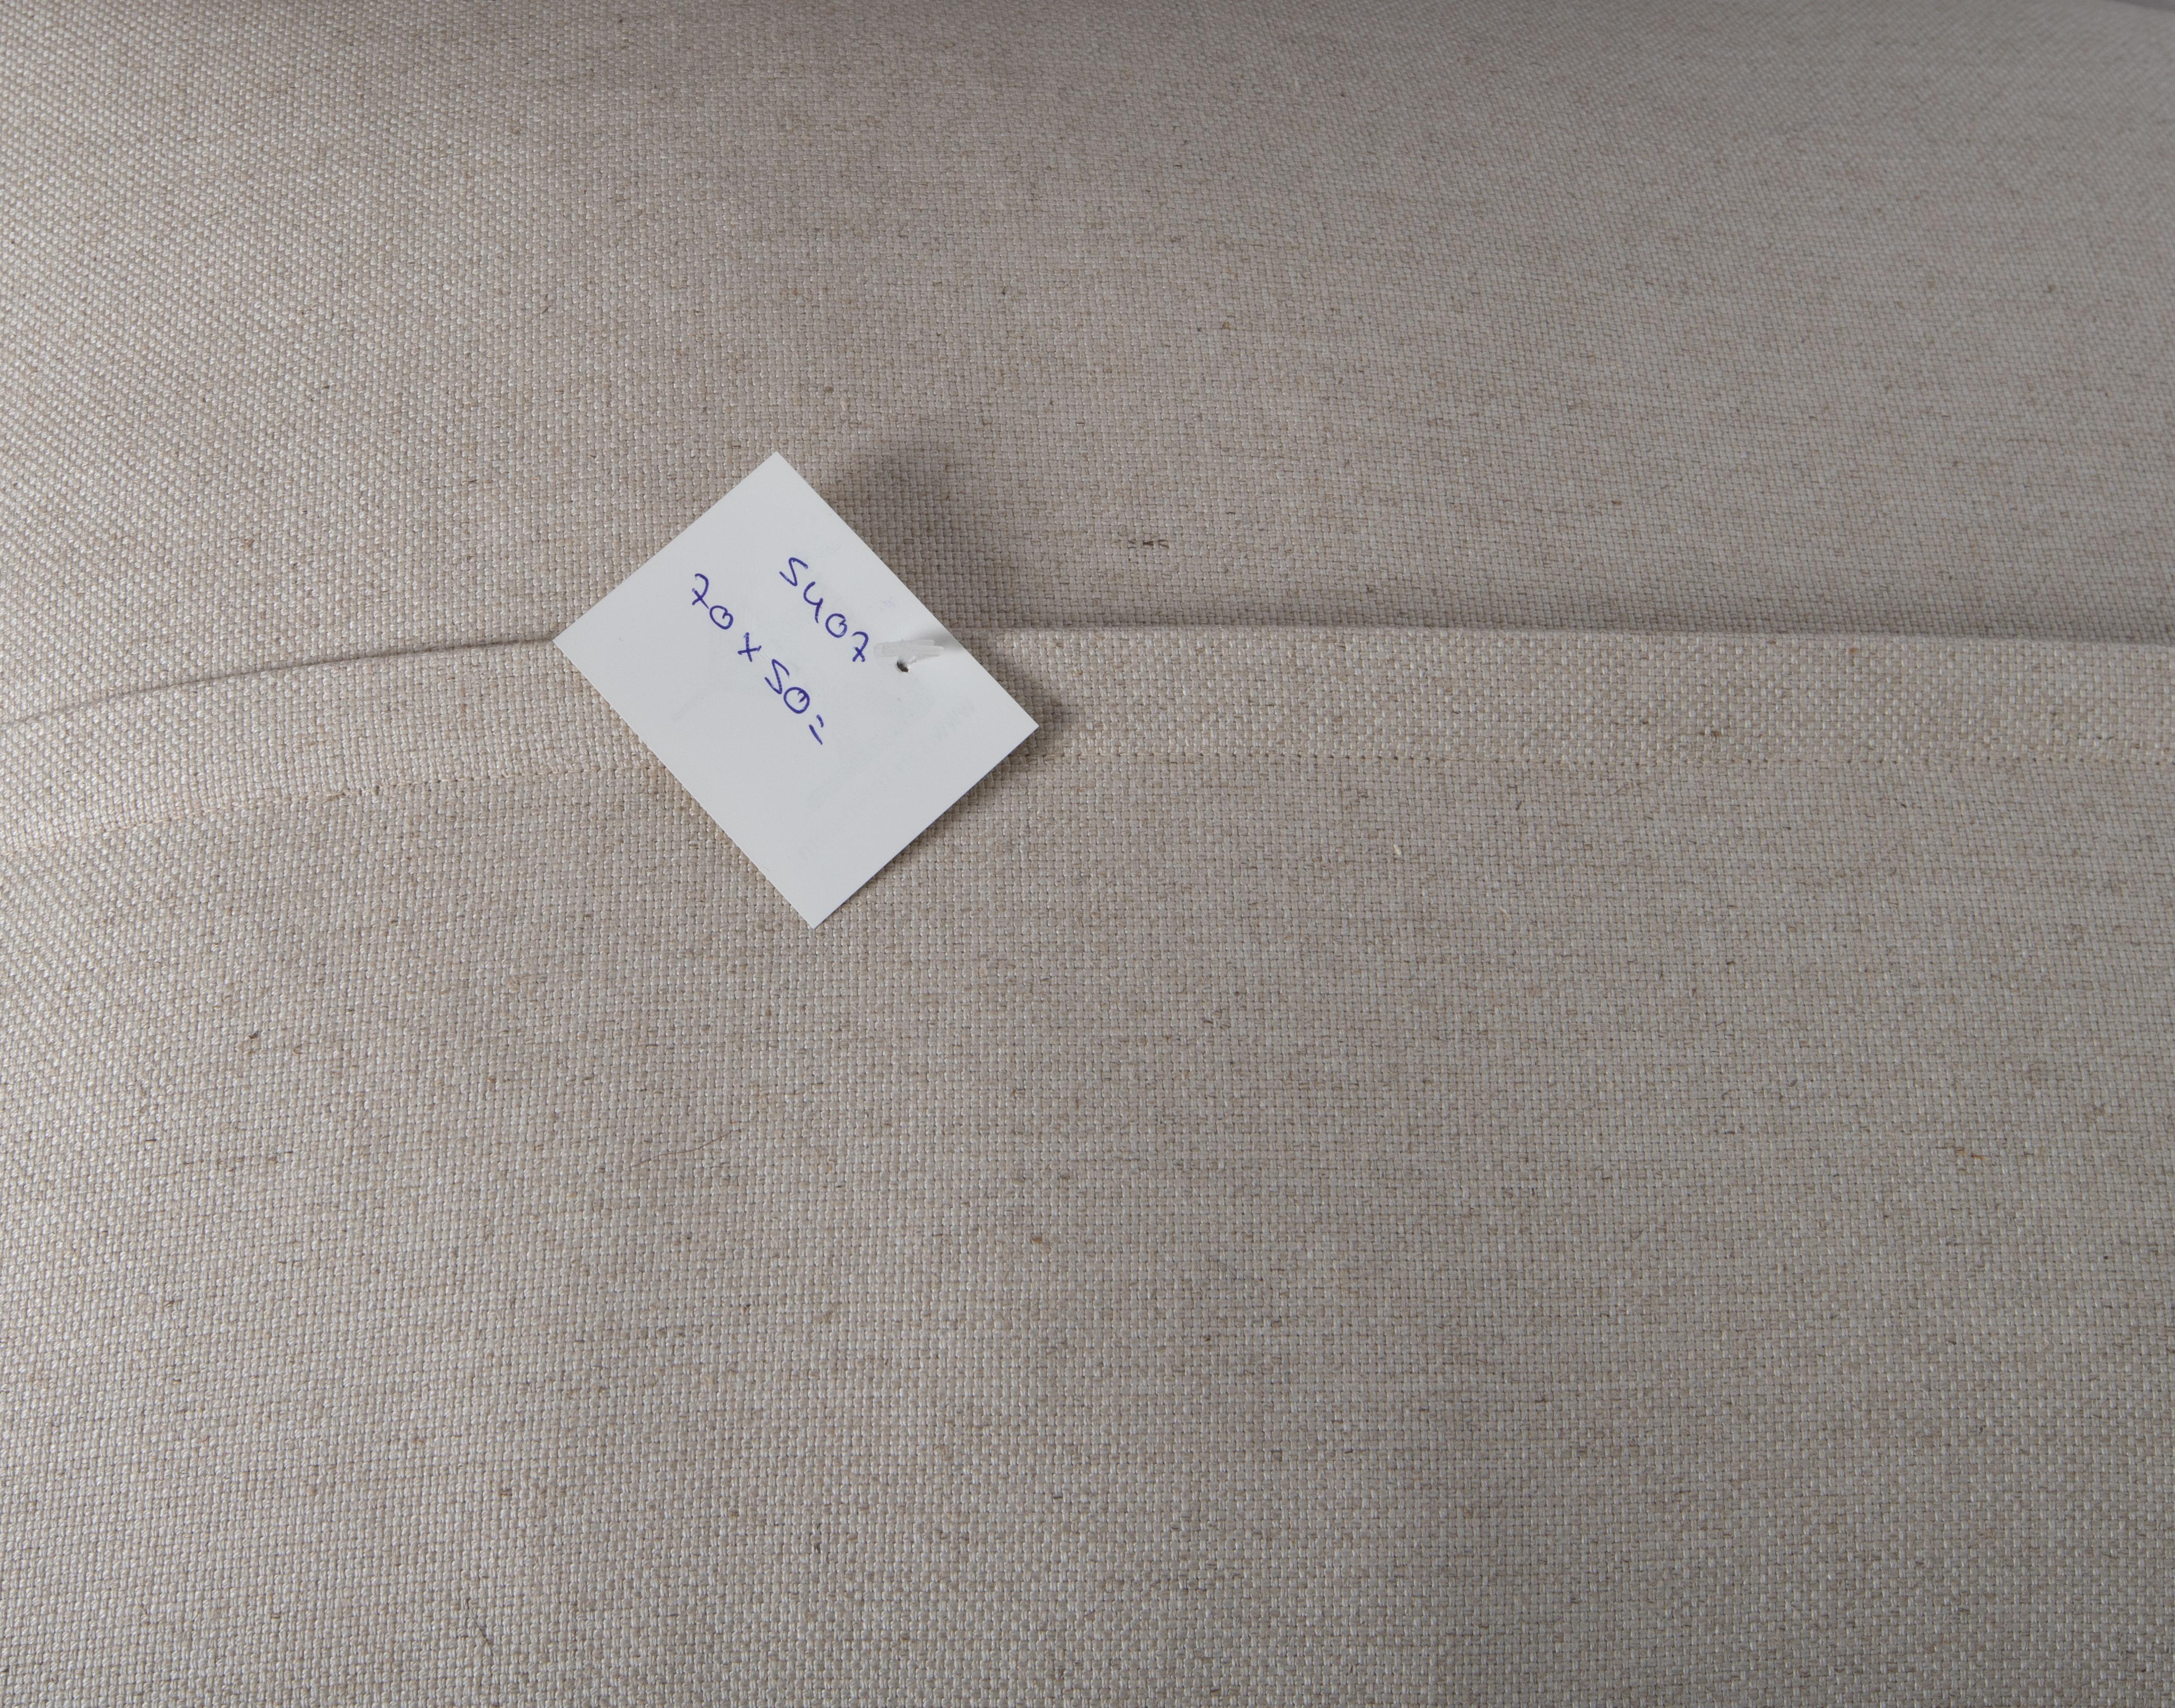 Angora/ Mohair Siirt Blanket Pillow Cover, 1960s/70s 1